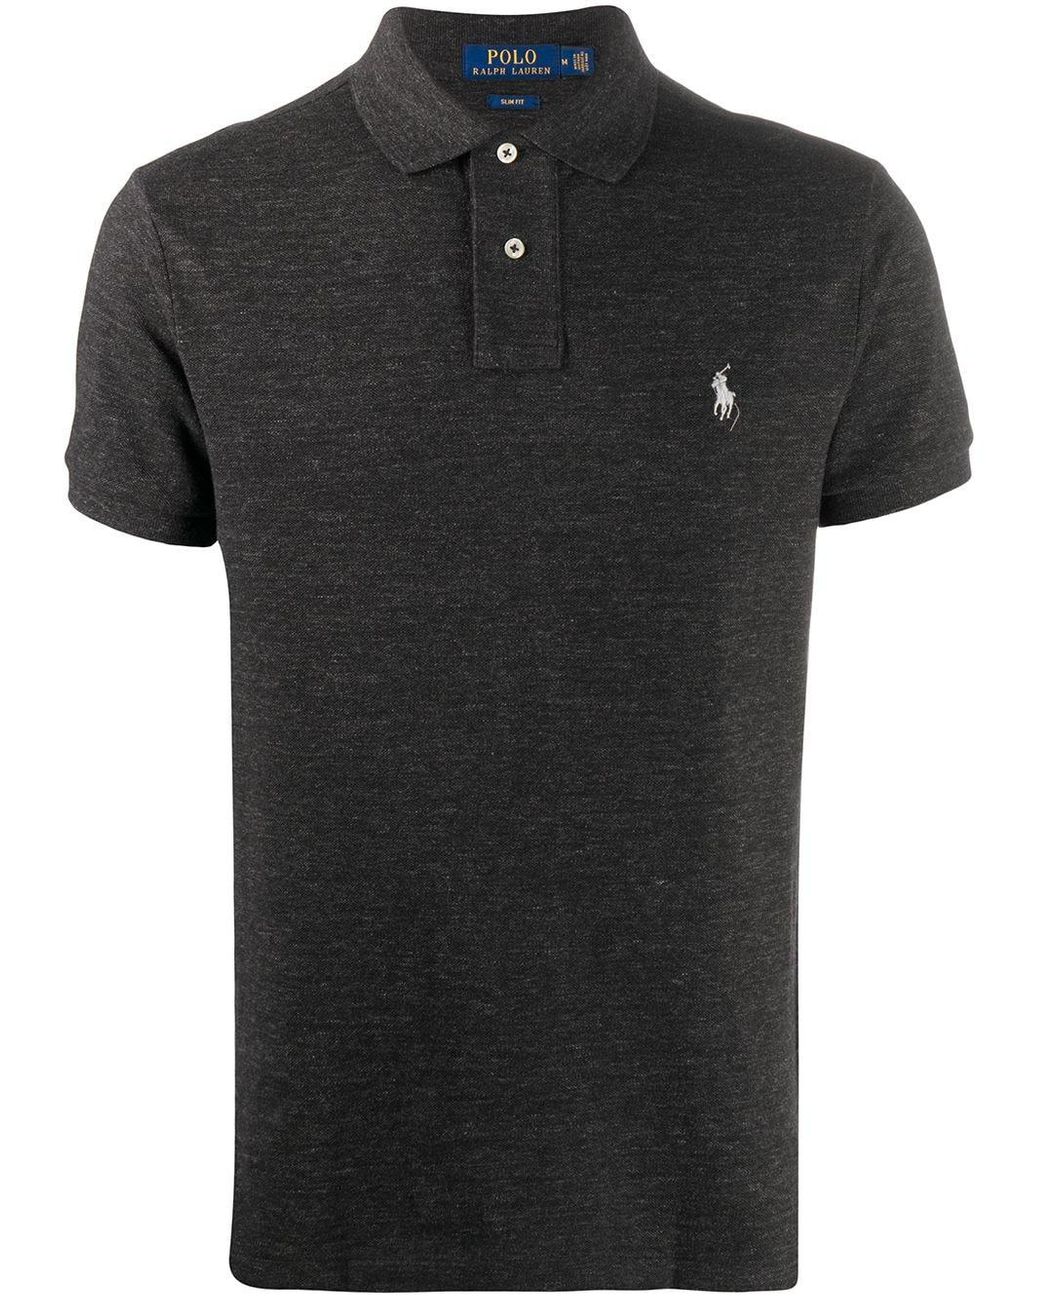 Polo Ralph Lauren Cotton Short-sleeve Polo Shirt in Black for Men - Lyst